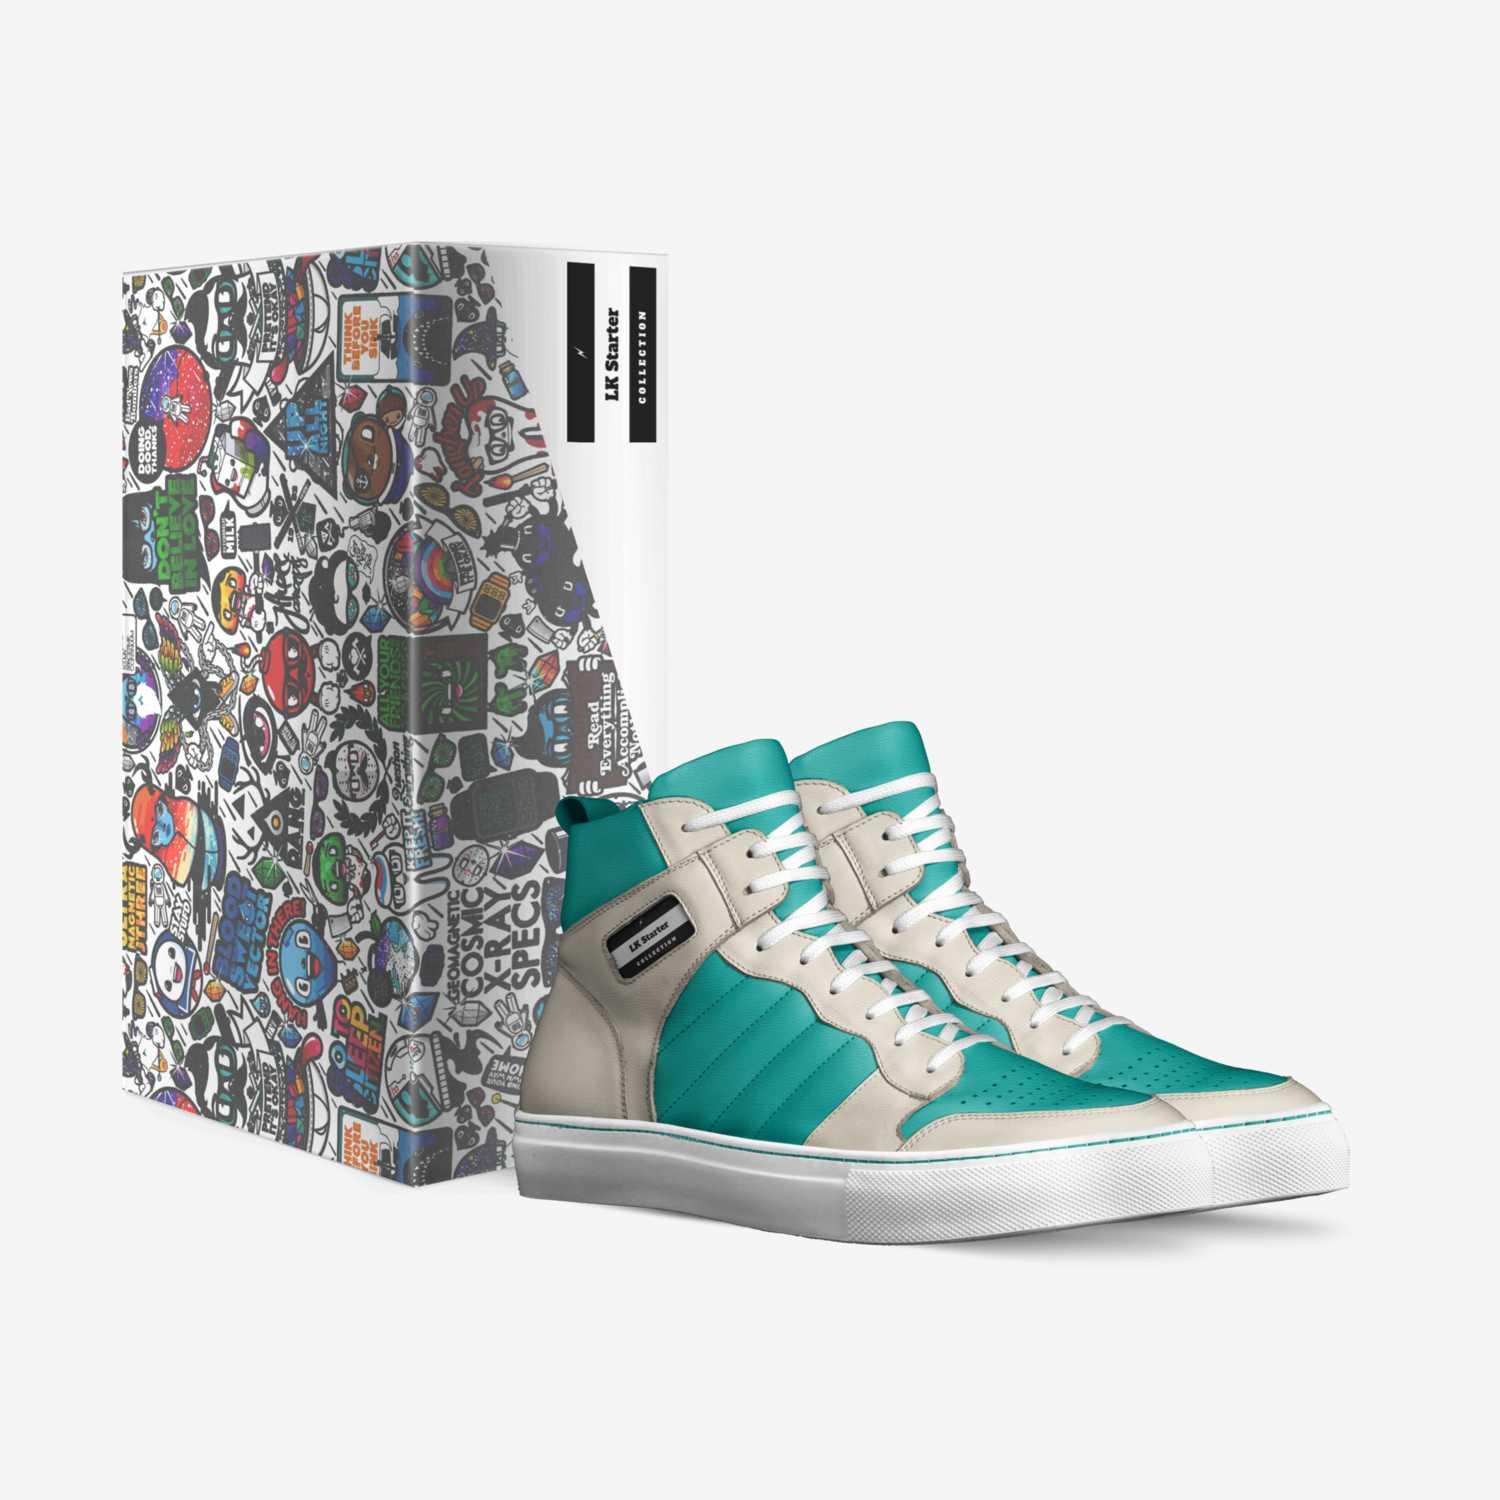 LK Starter custom made in Italy shoes by Darren Darren | Box view